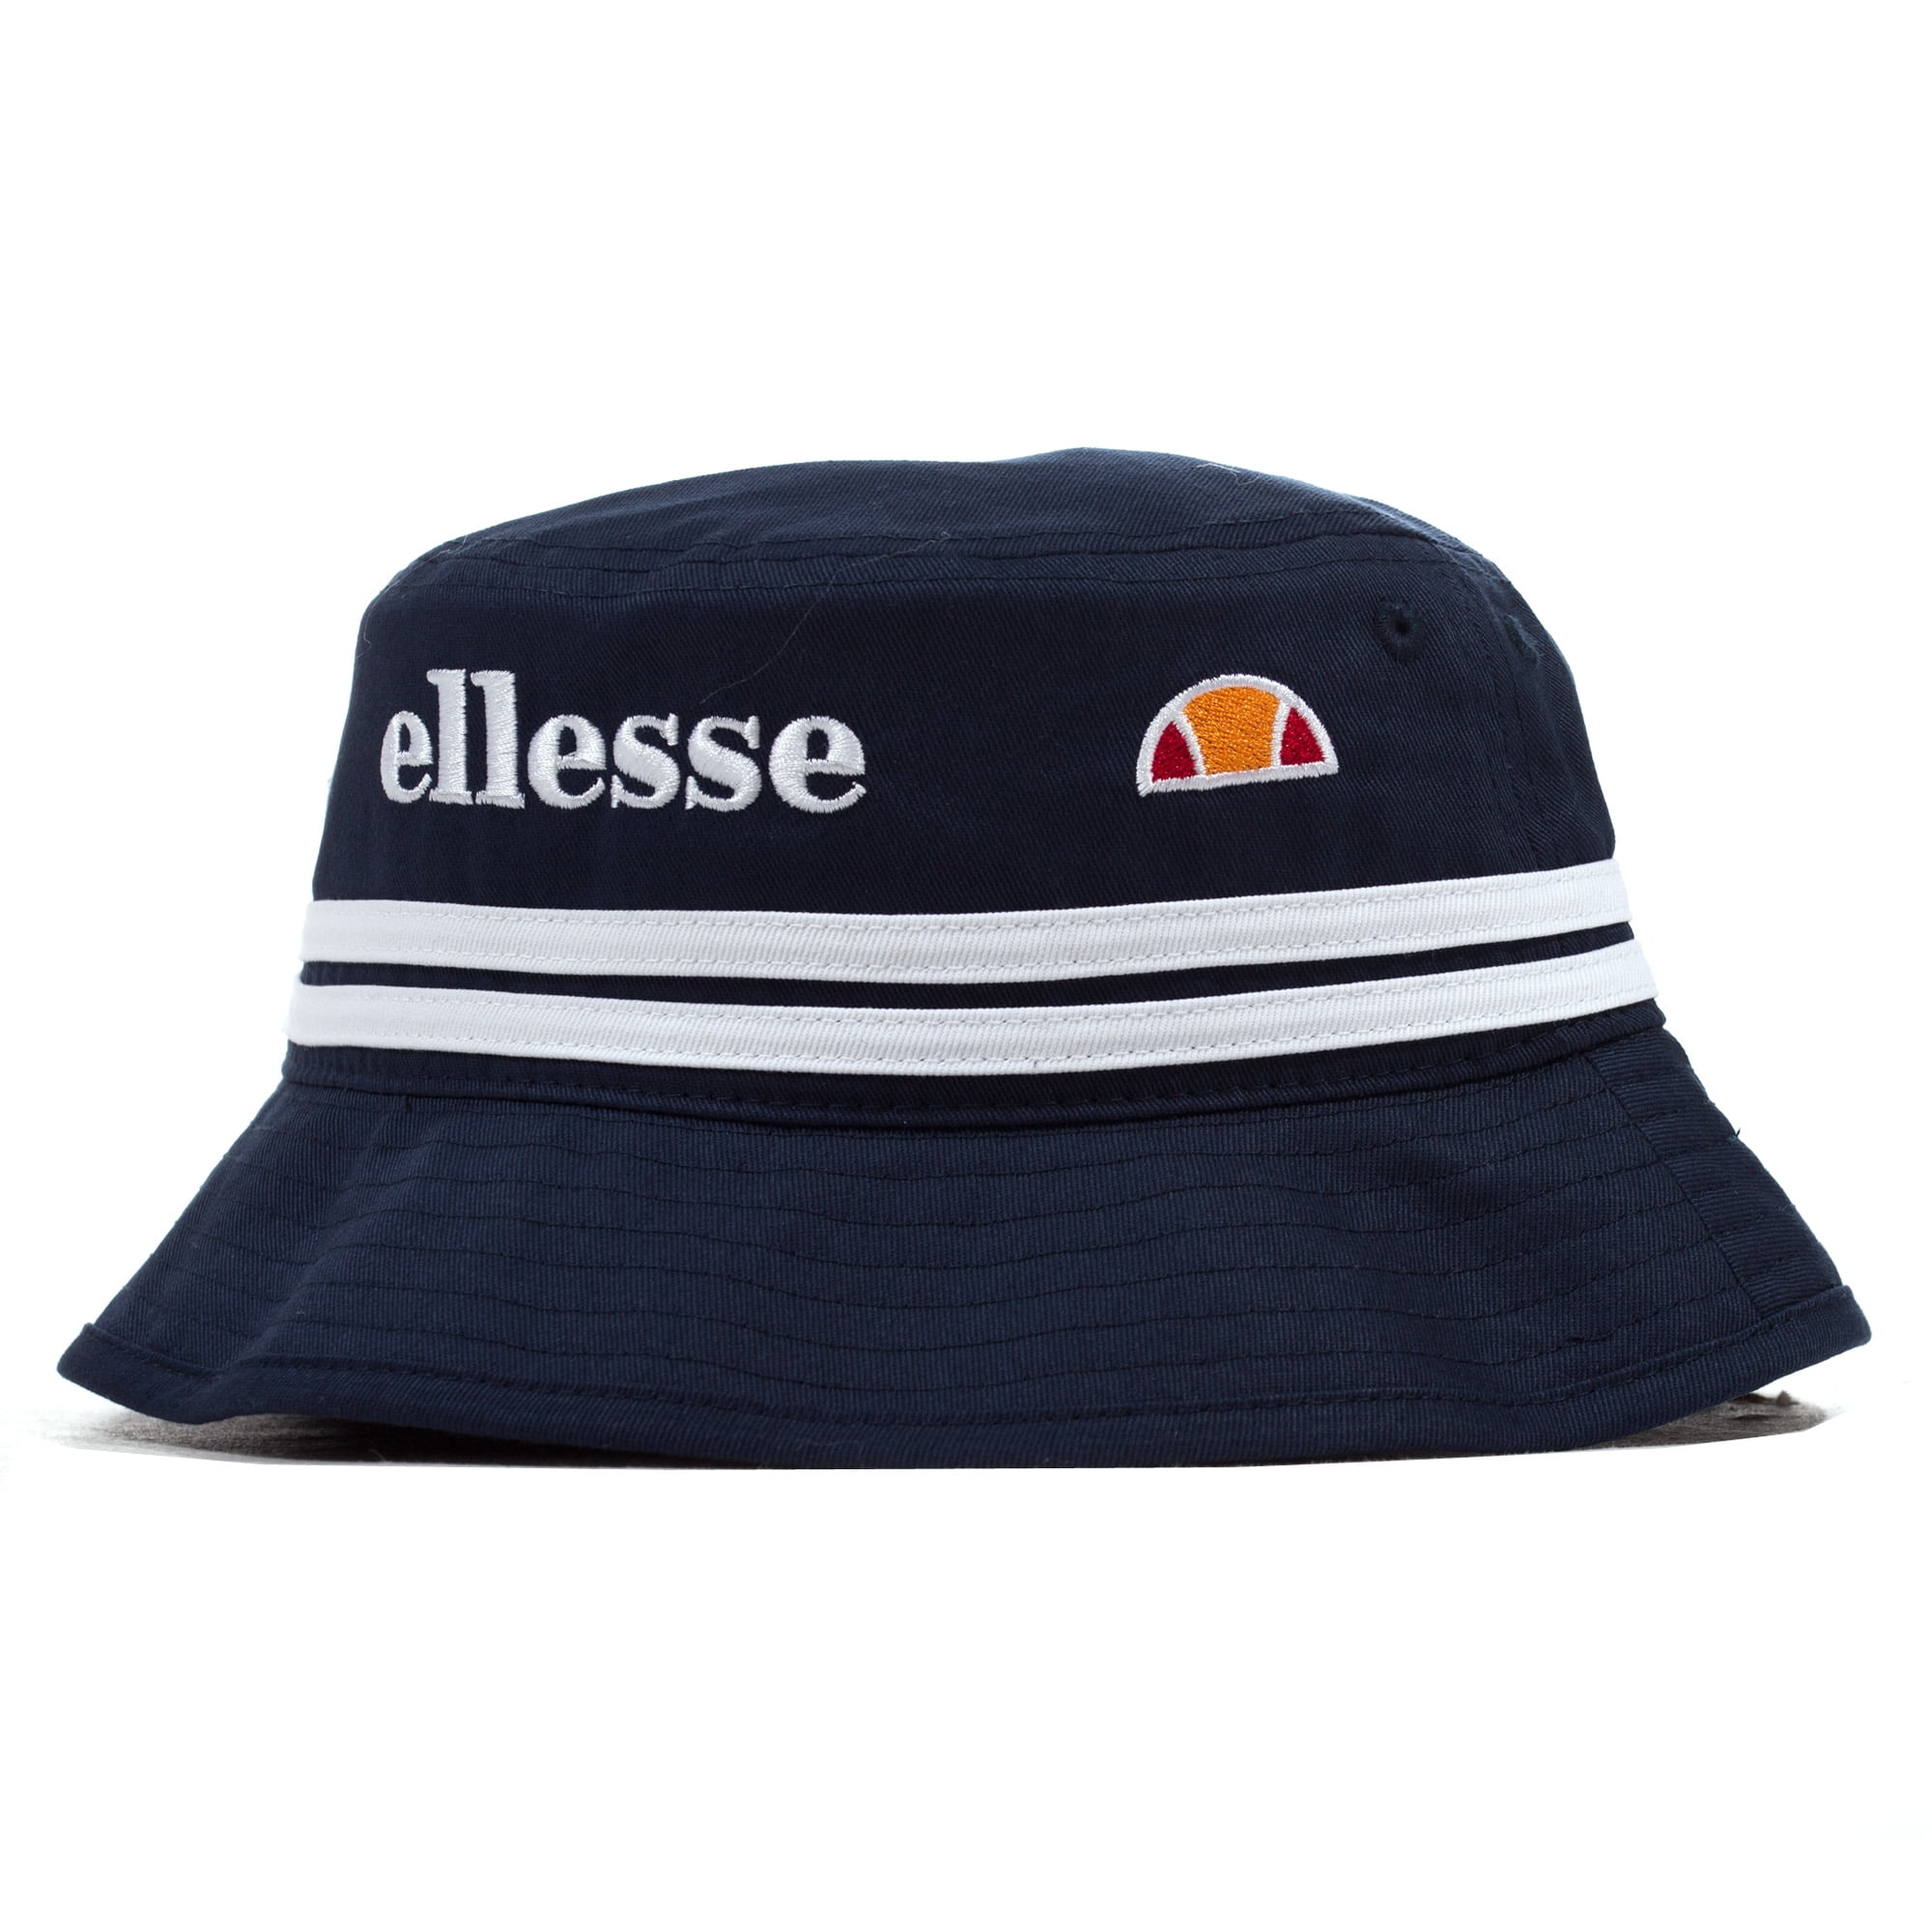 Ellesse Heritage Lorenzo Fashion Hat Festival Size Blue Bucket Navy - One